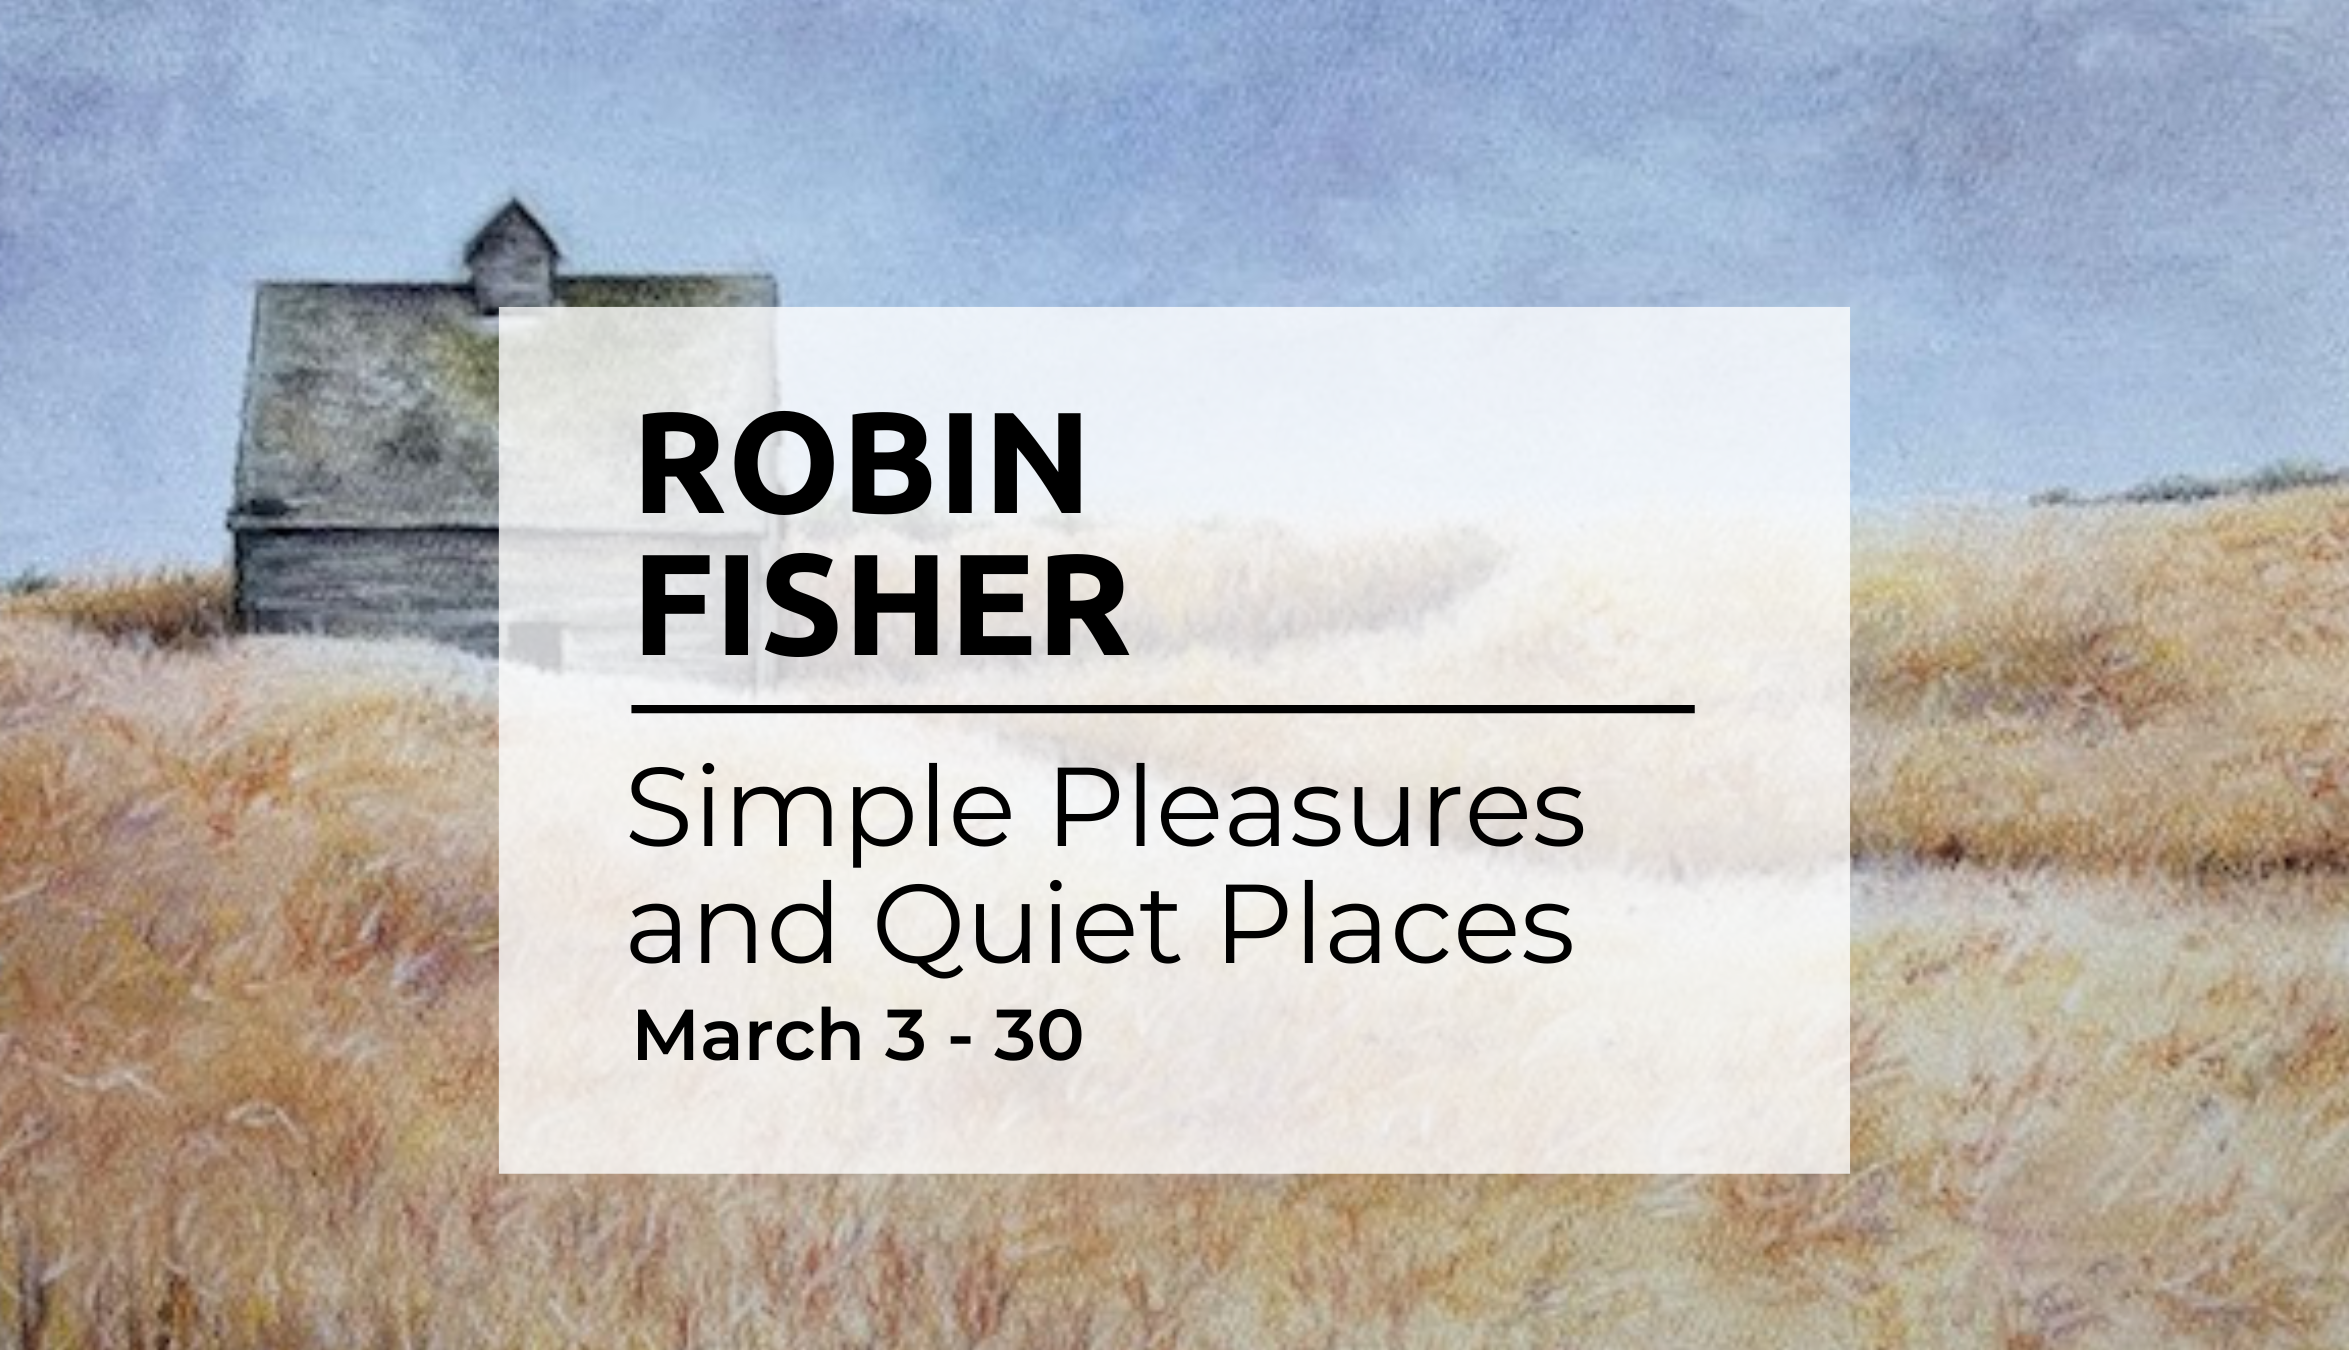 On Exhibit: "Simple Pleasures and Quiet Places"